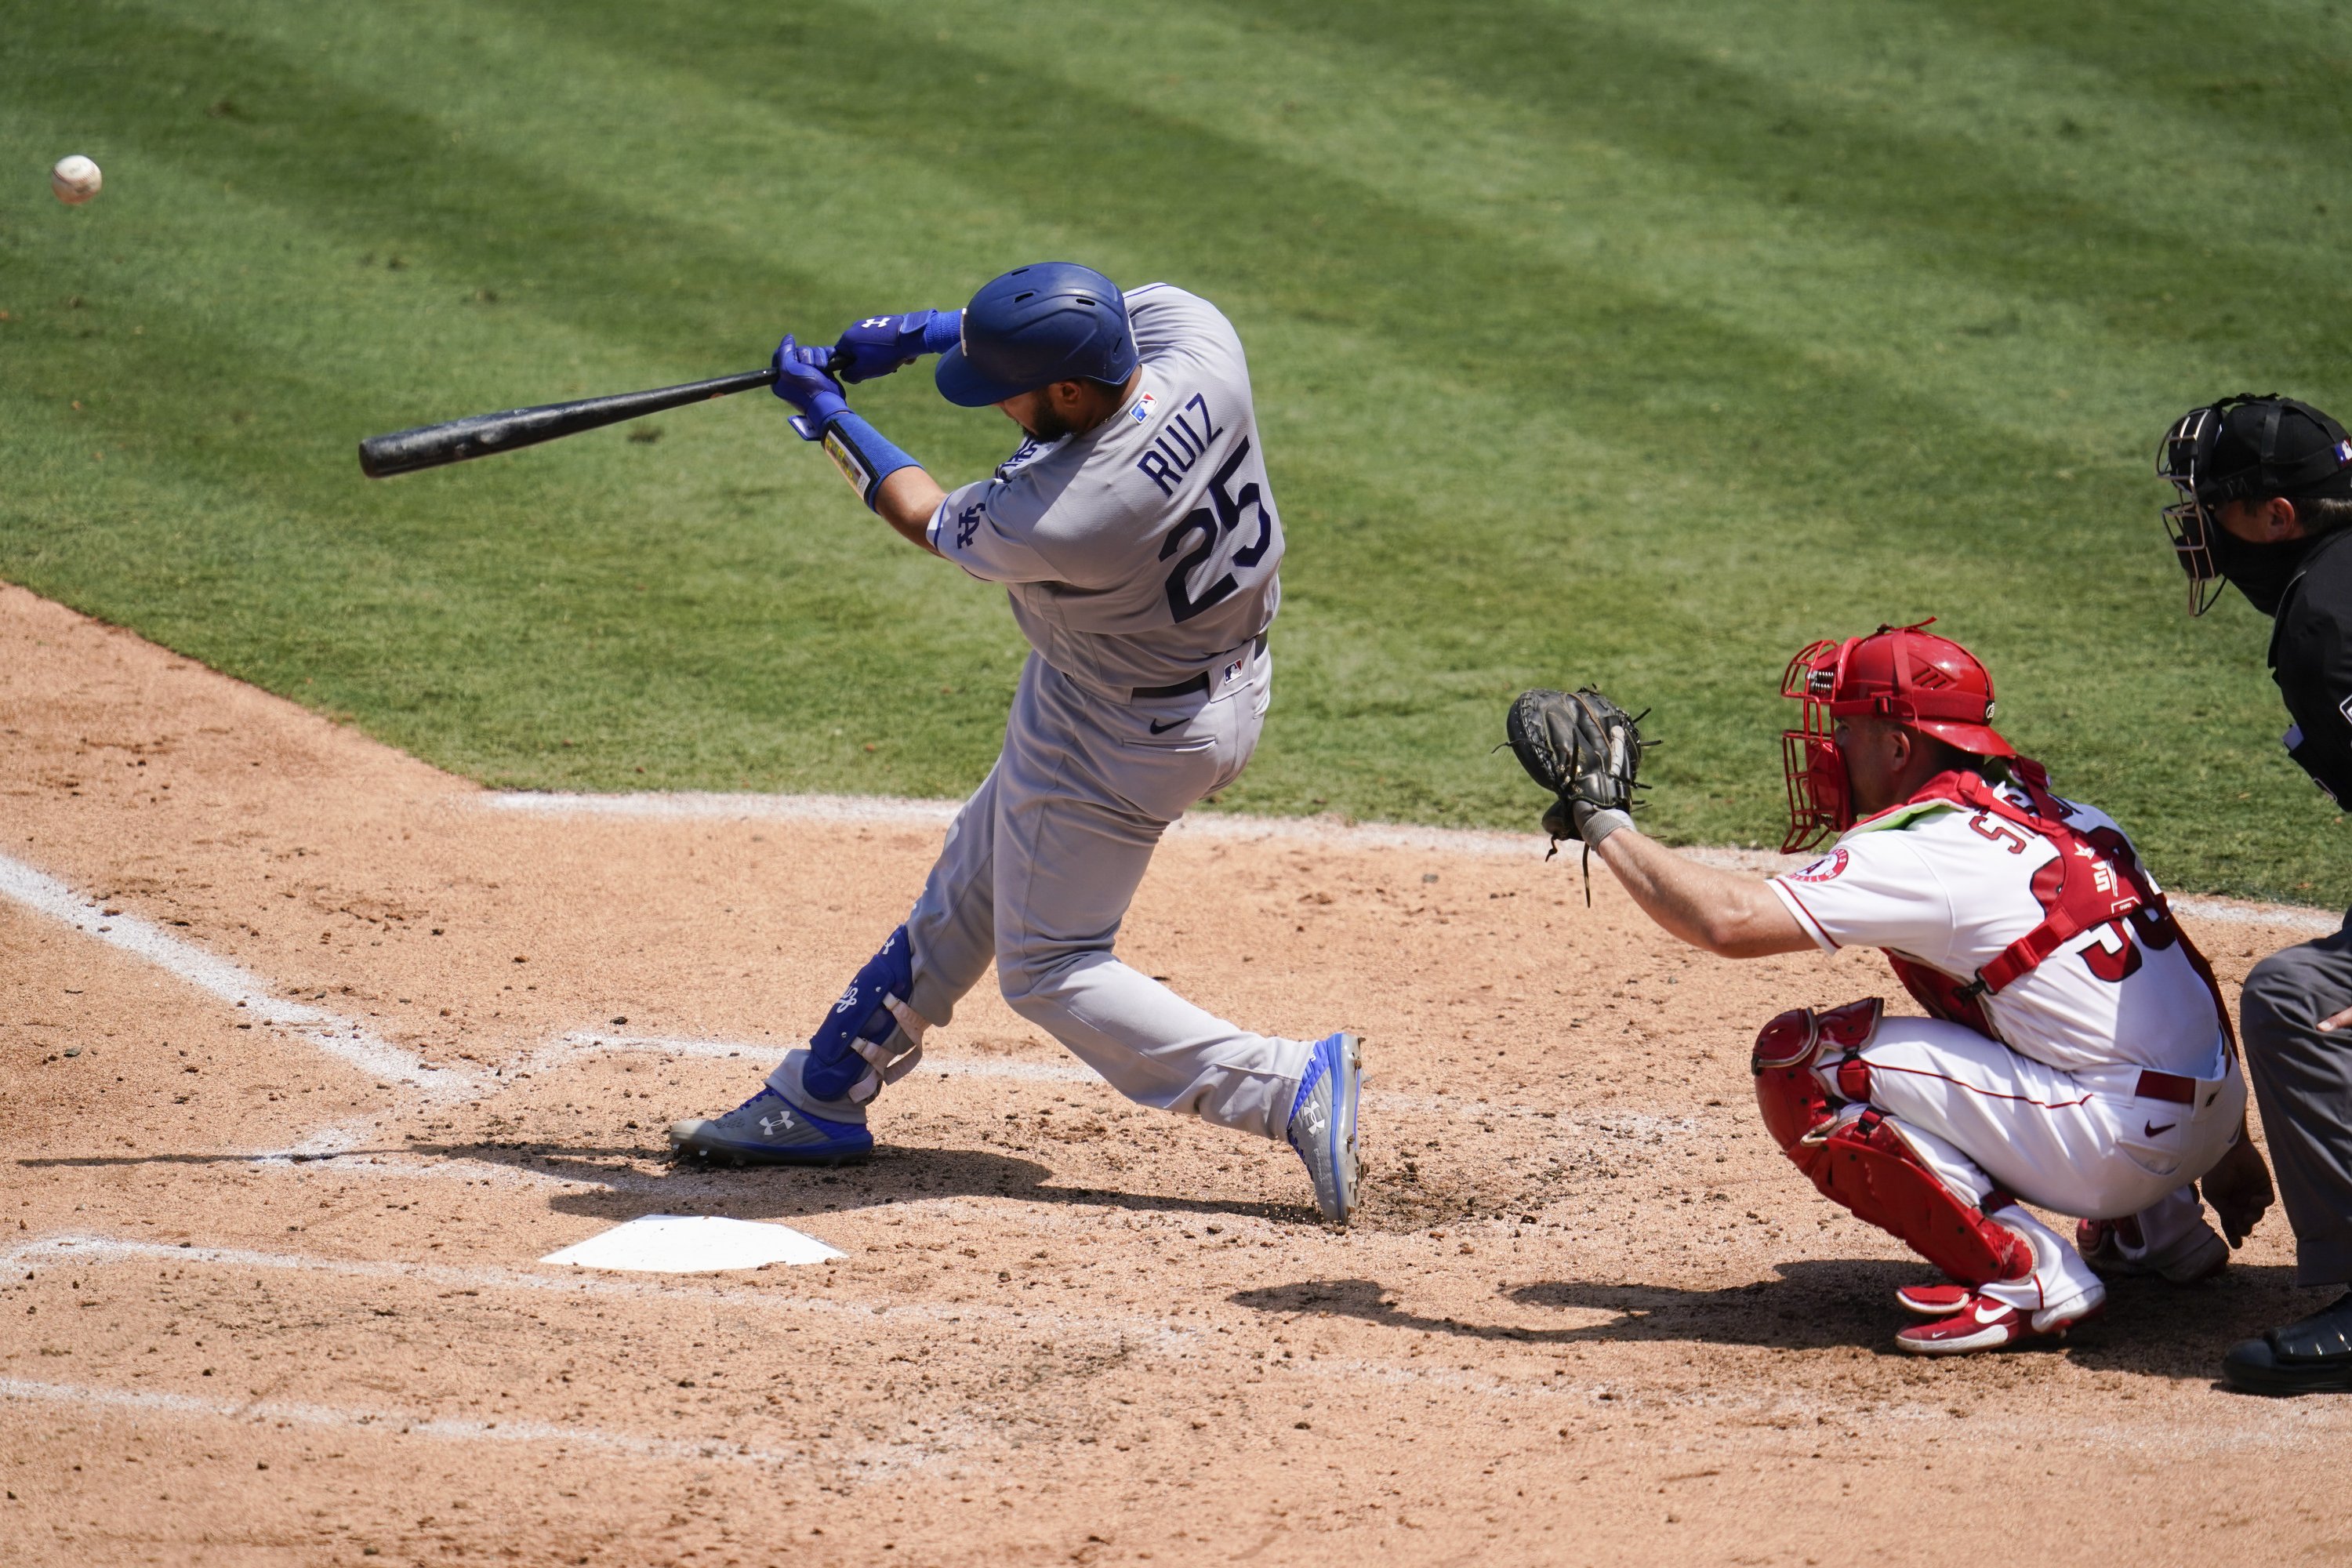 Keibert Ruiz starts career with HR, Dodgers sweep Angels 8-3 | AP News